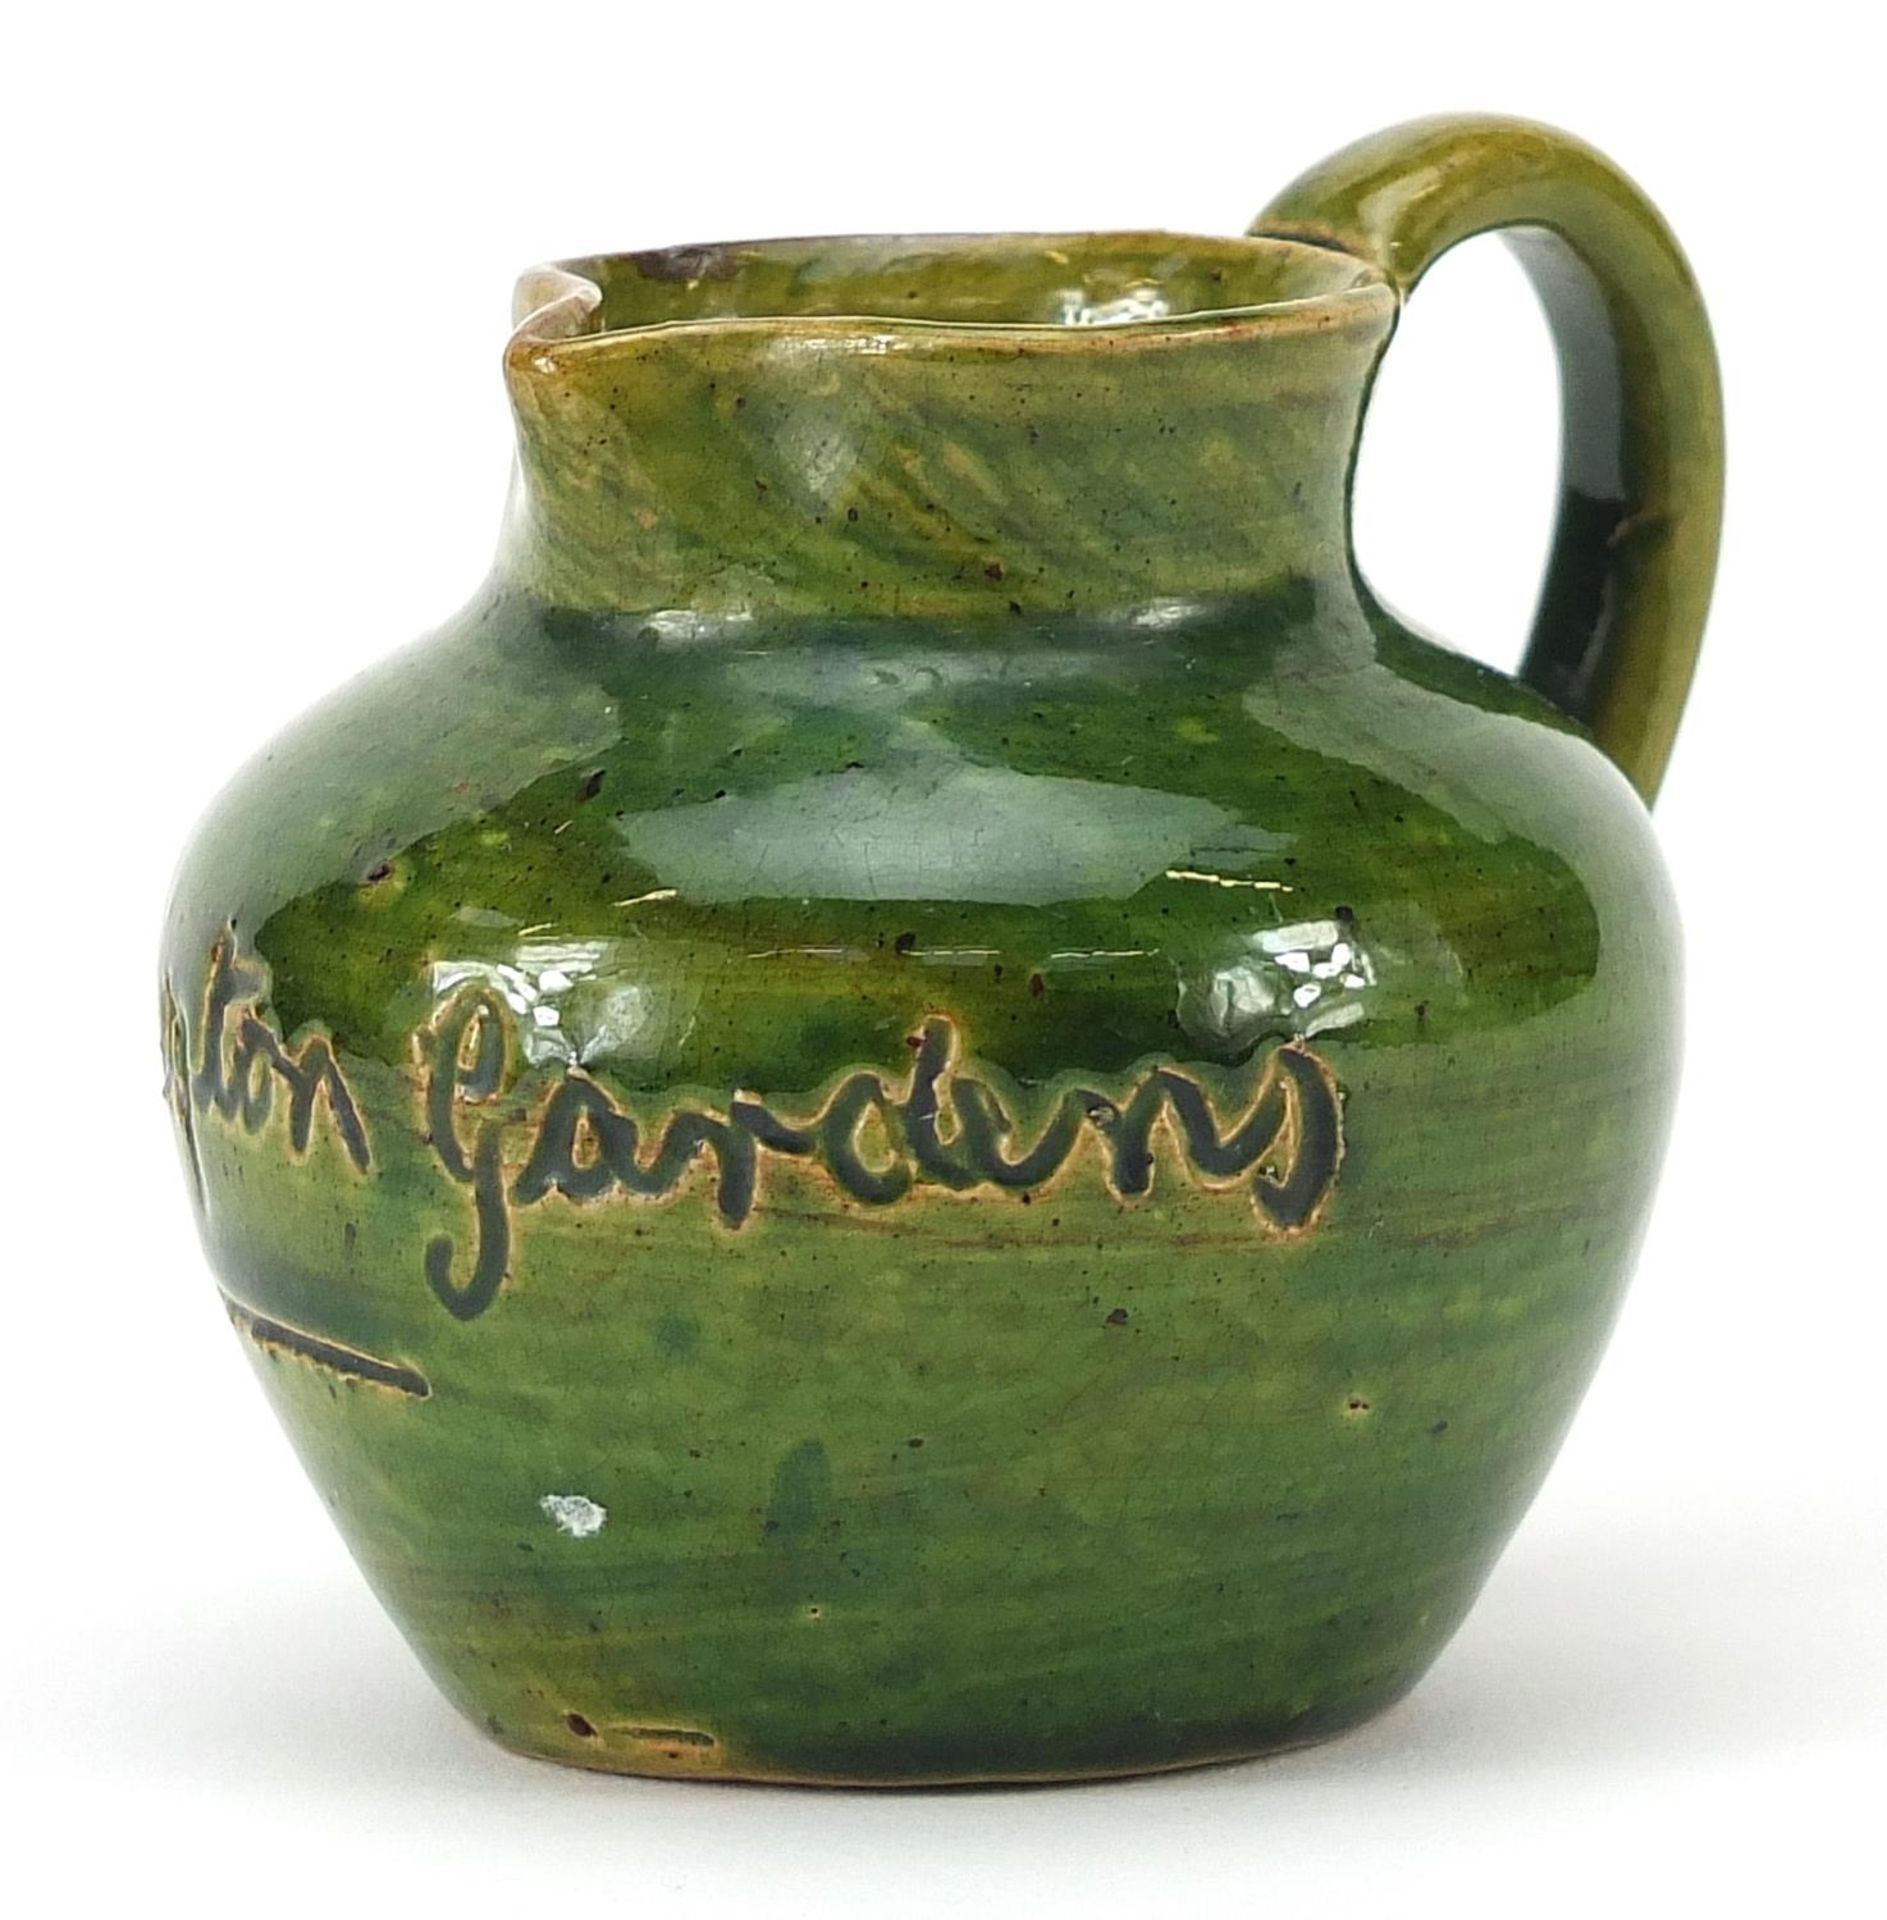 Dicker ware jug incised Littlington Gardens, 6cm high